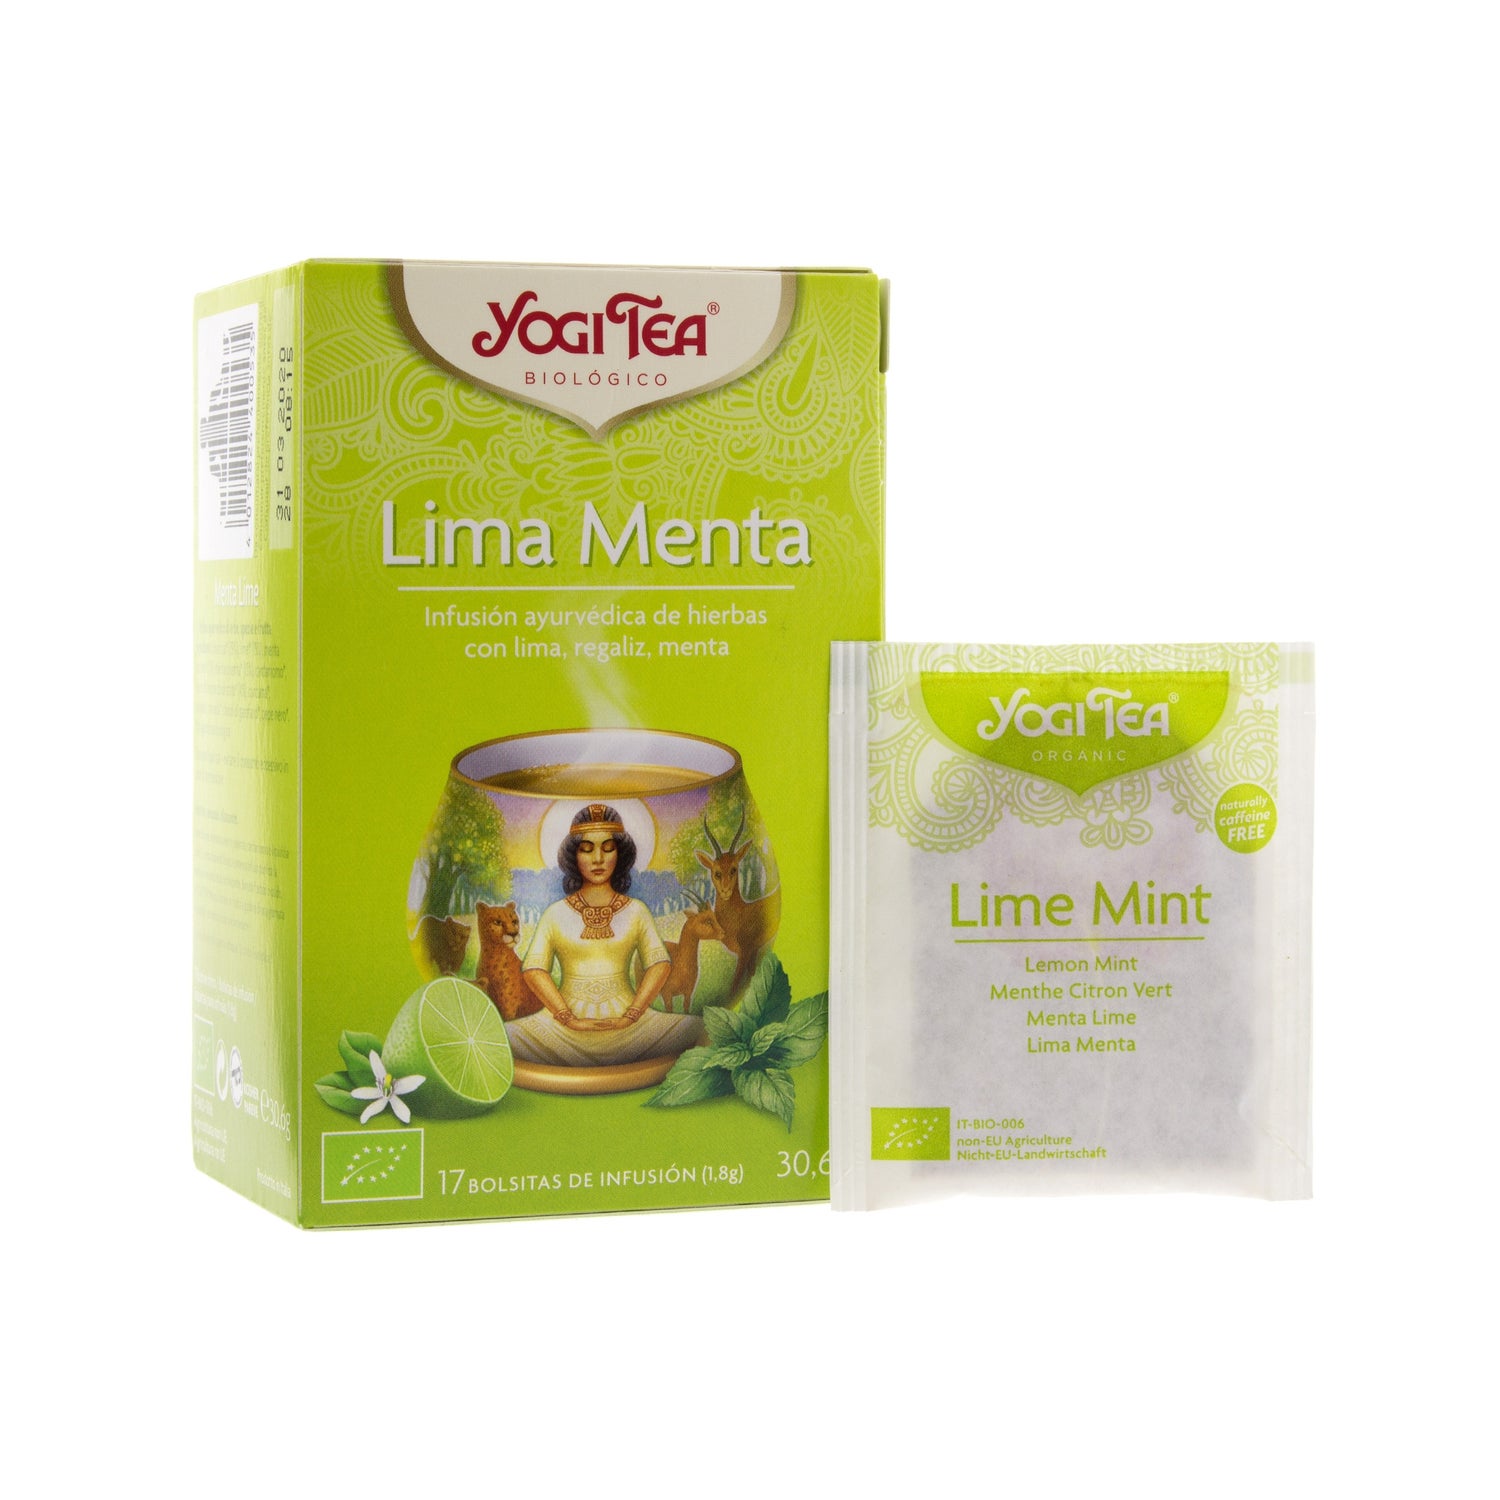 Yogi Tea - L'Infusion Menthe citron vert Bio